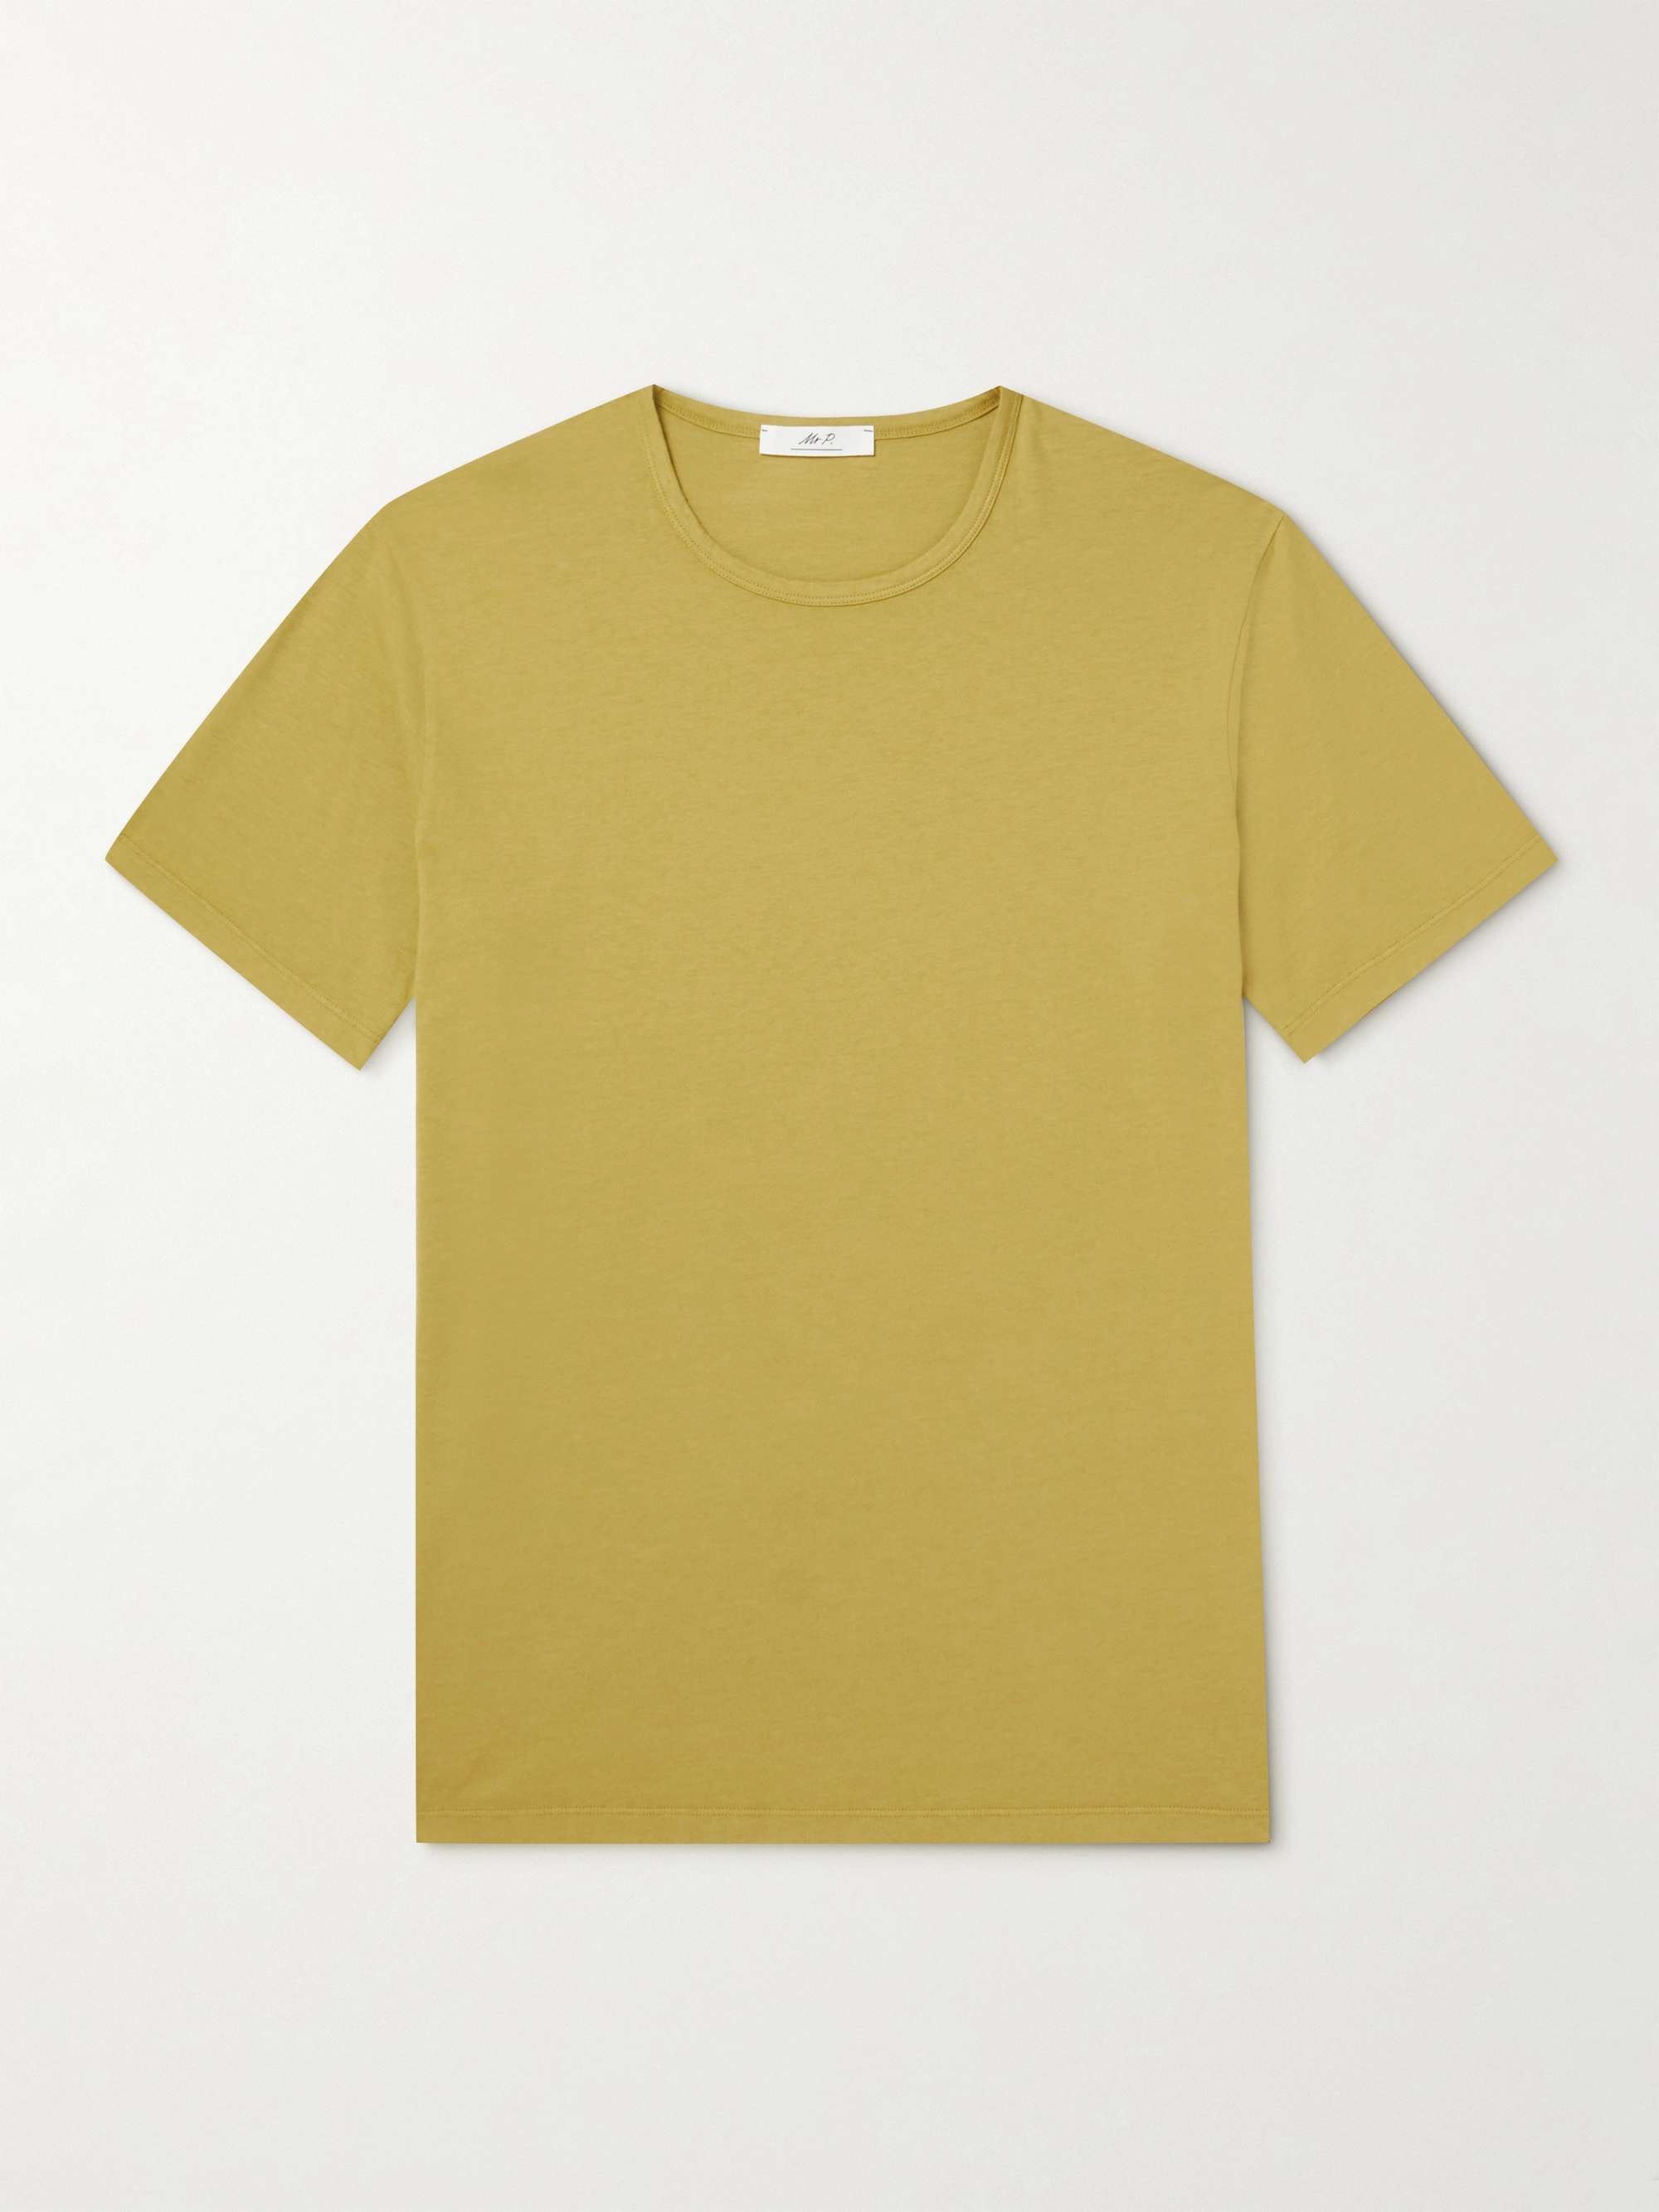 Plain-knit jersey T-shirt in a silk-and-cotton blend